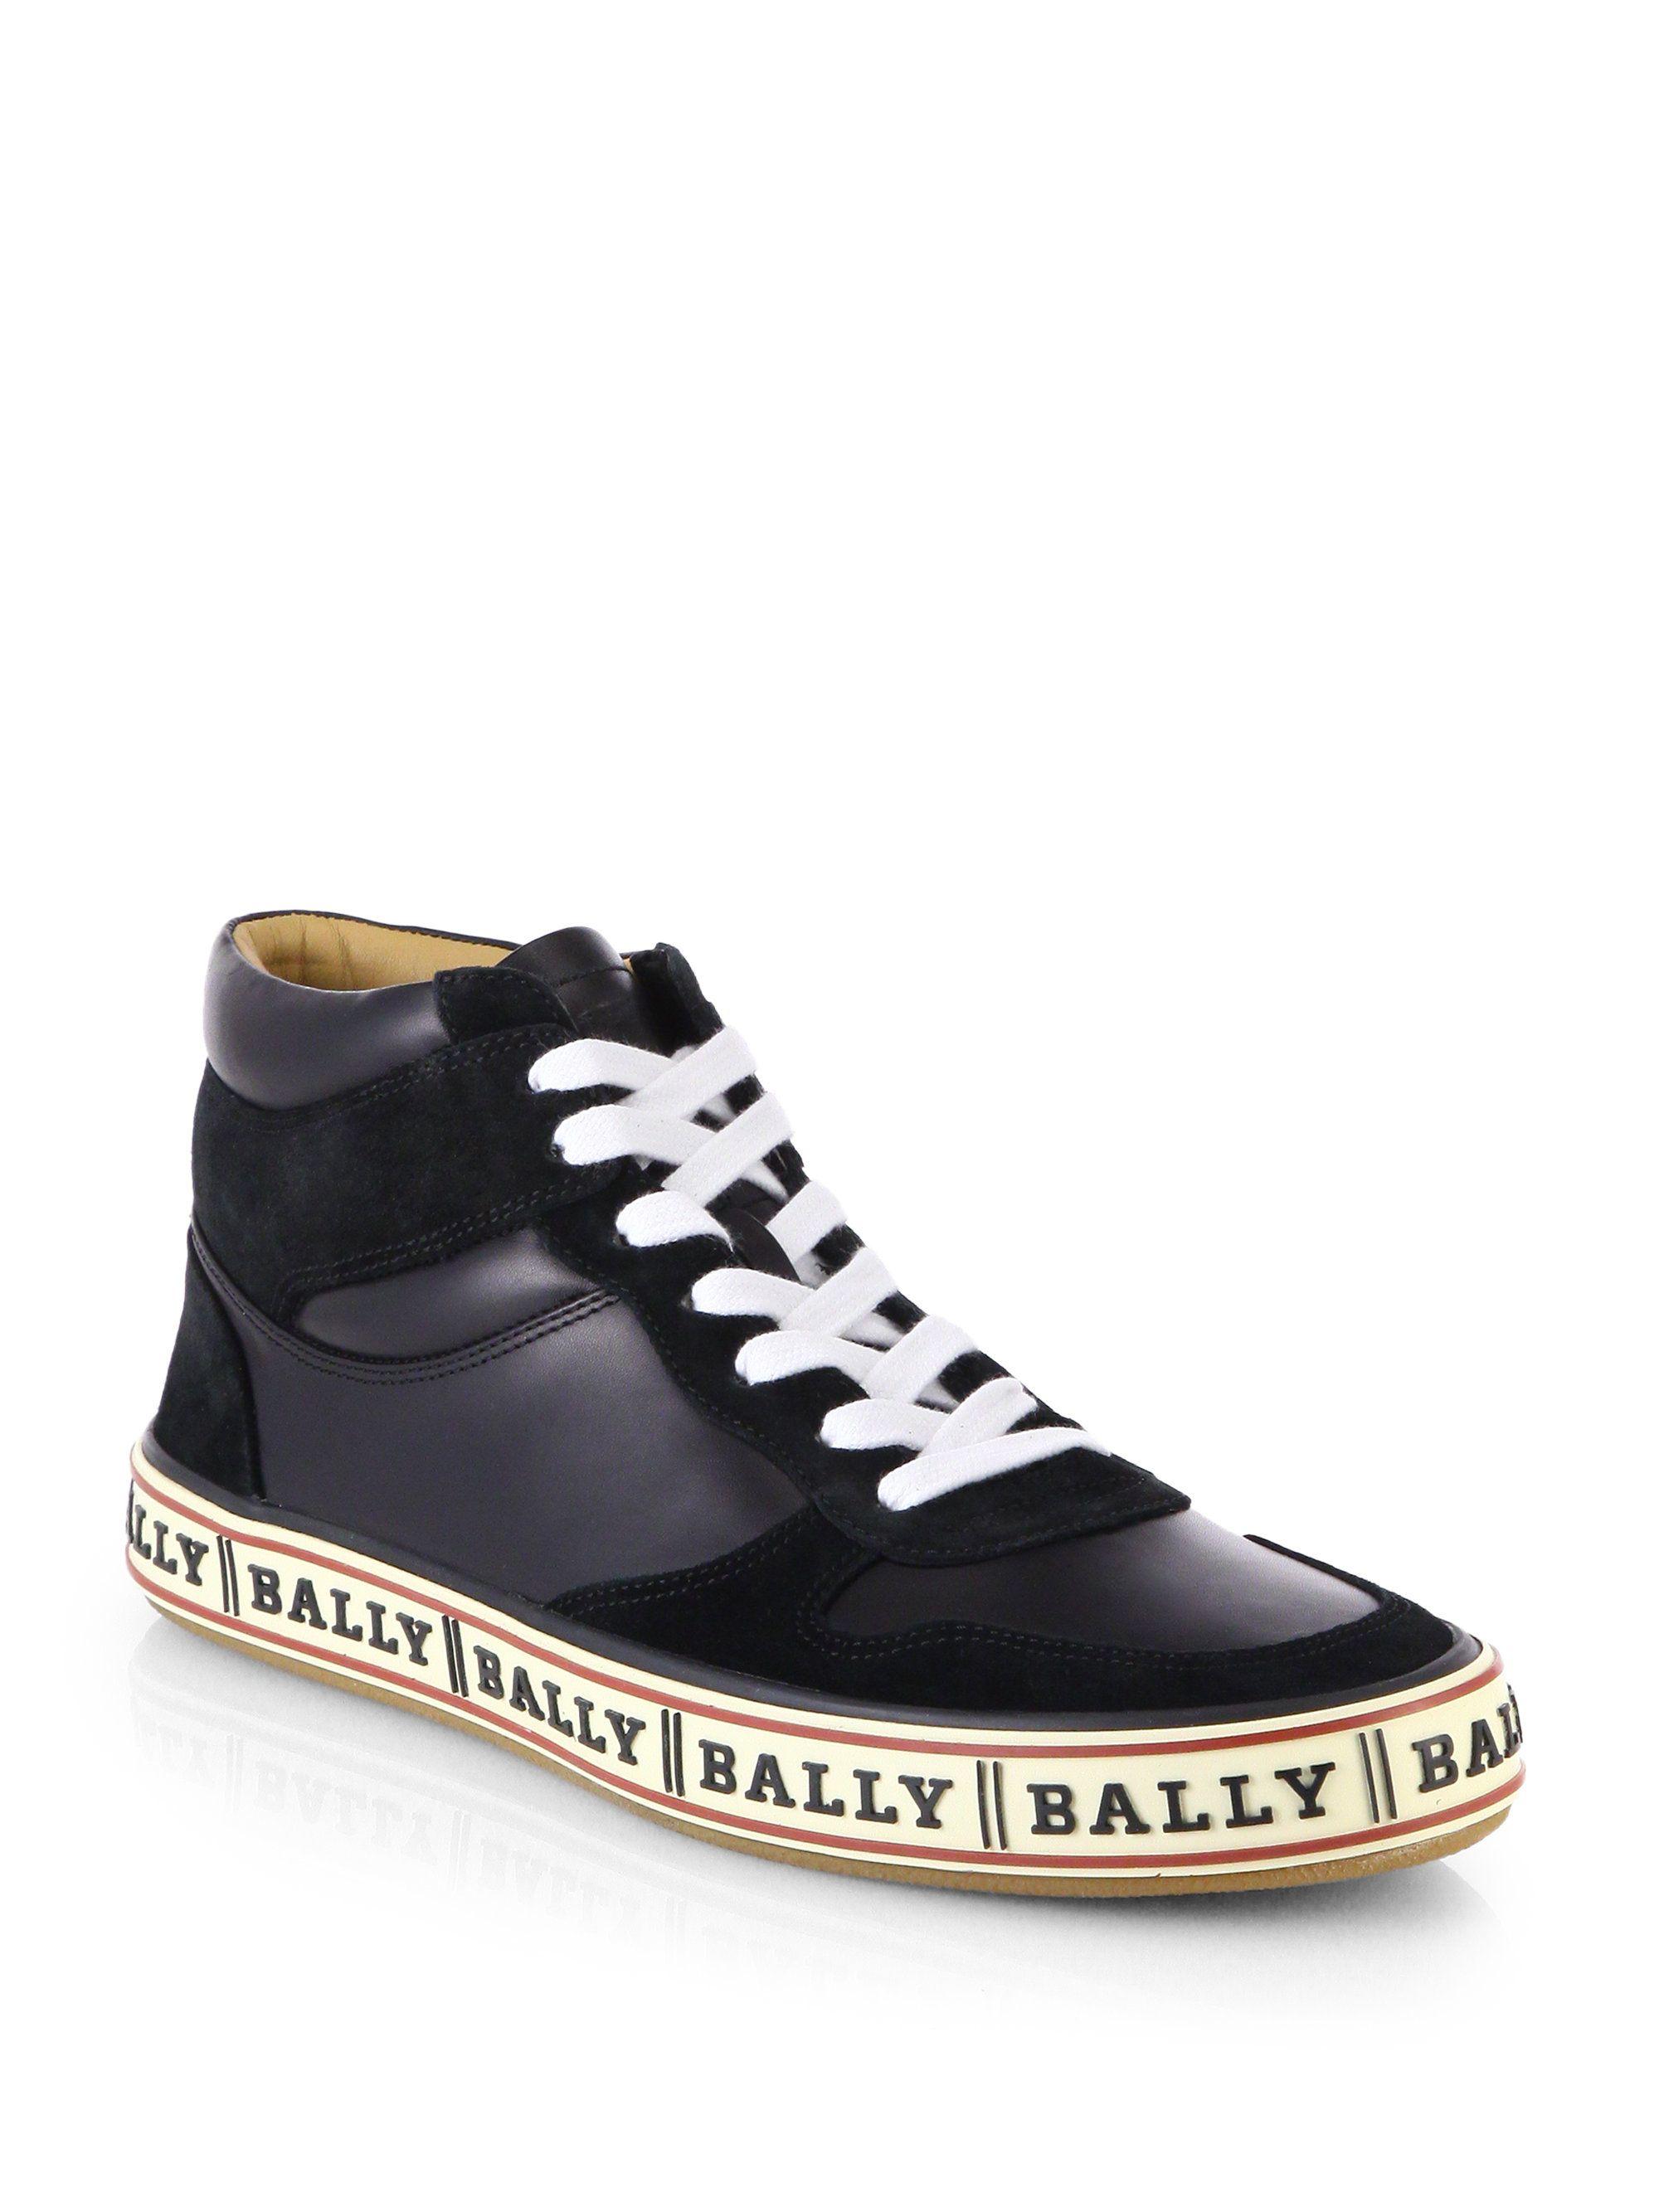 Bally Shoes Logo - LogoDix